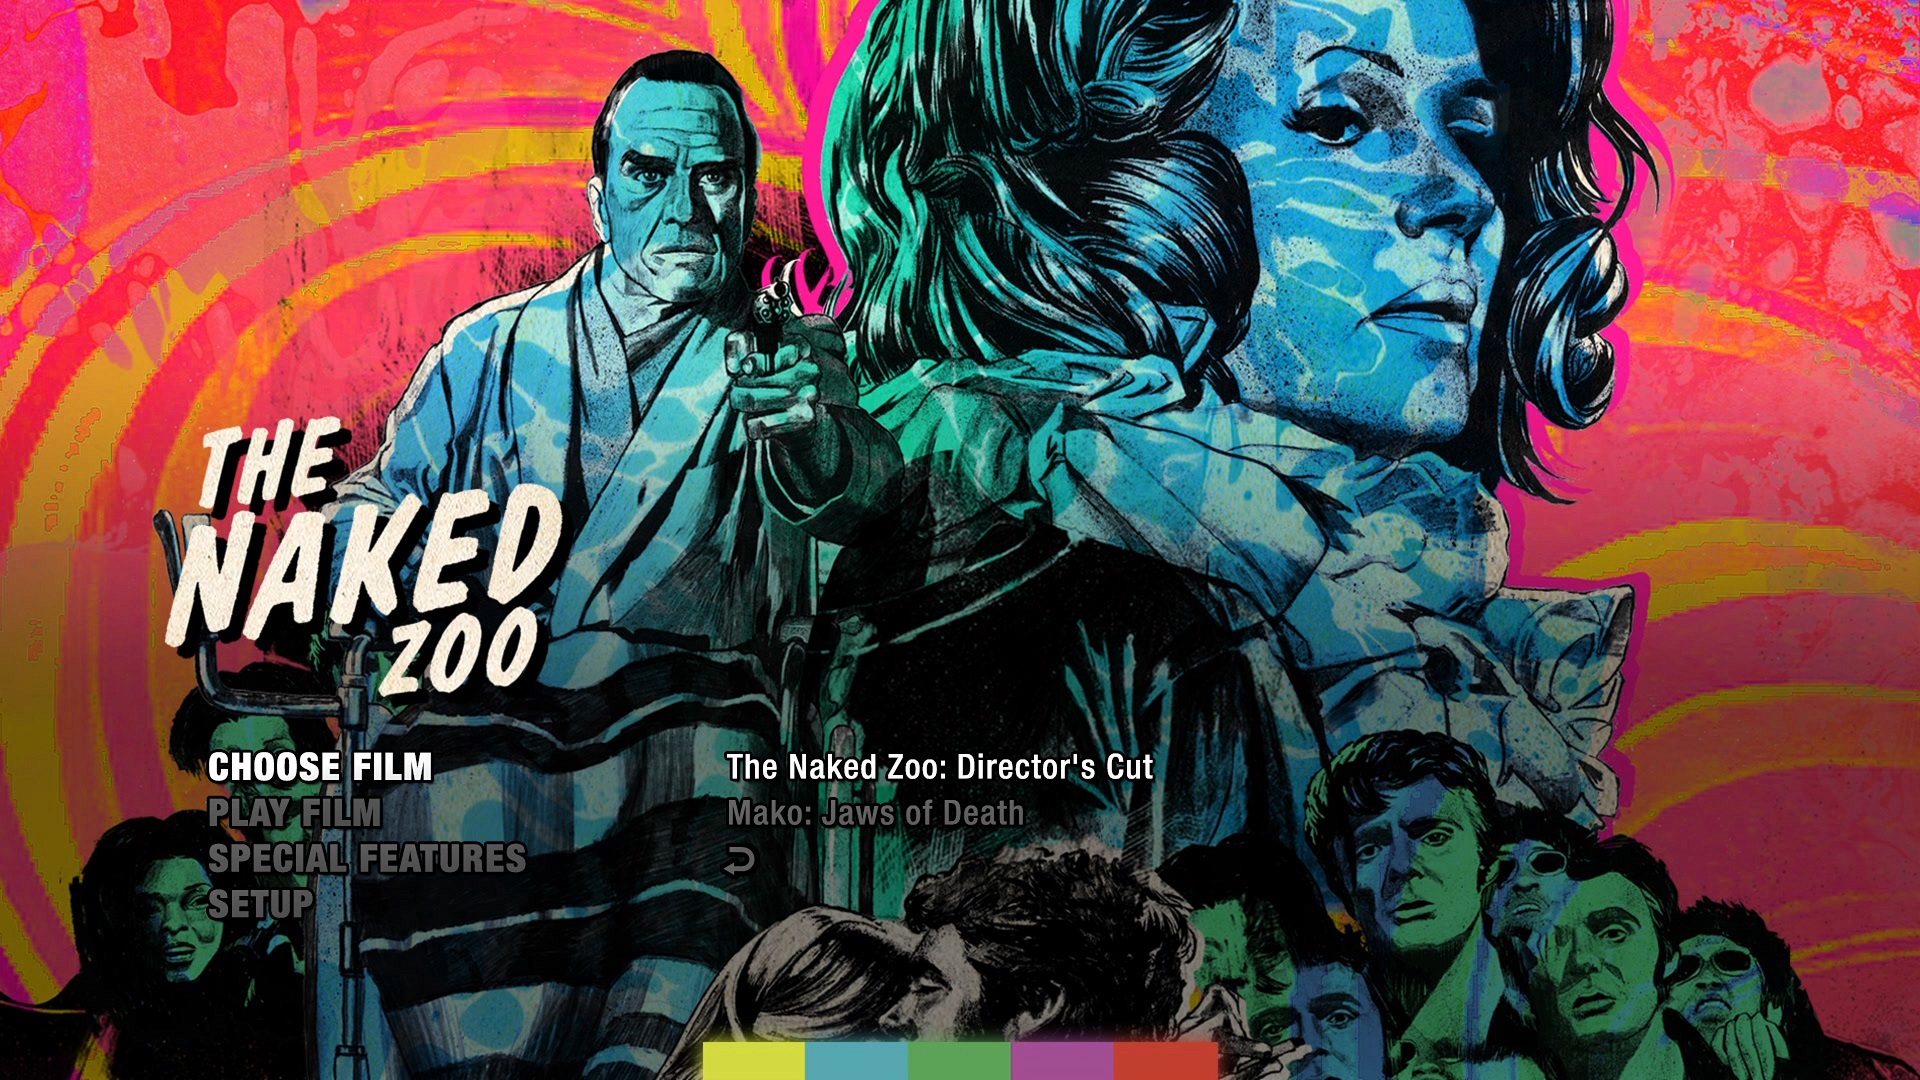 The Naked Zoo Blu-ray Choose Film Menu